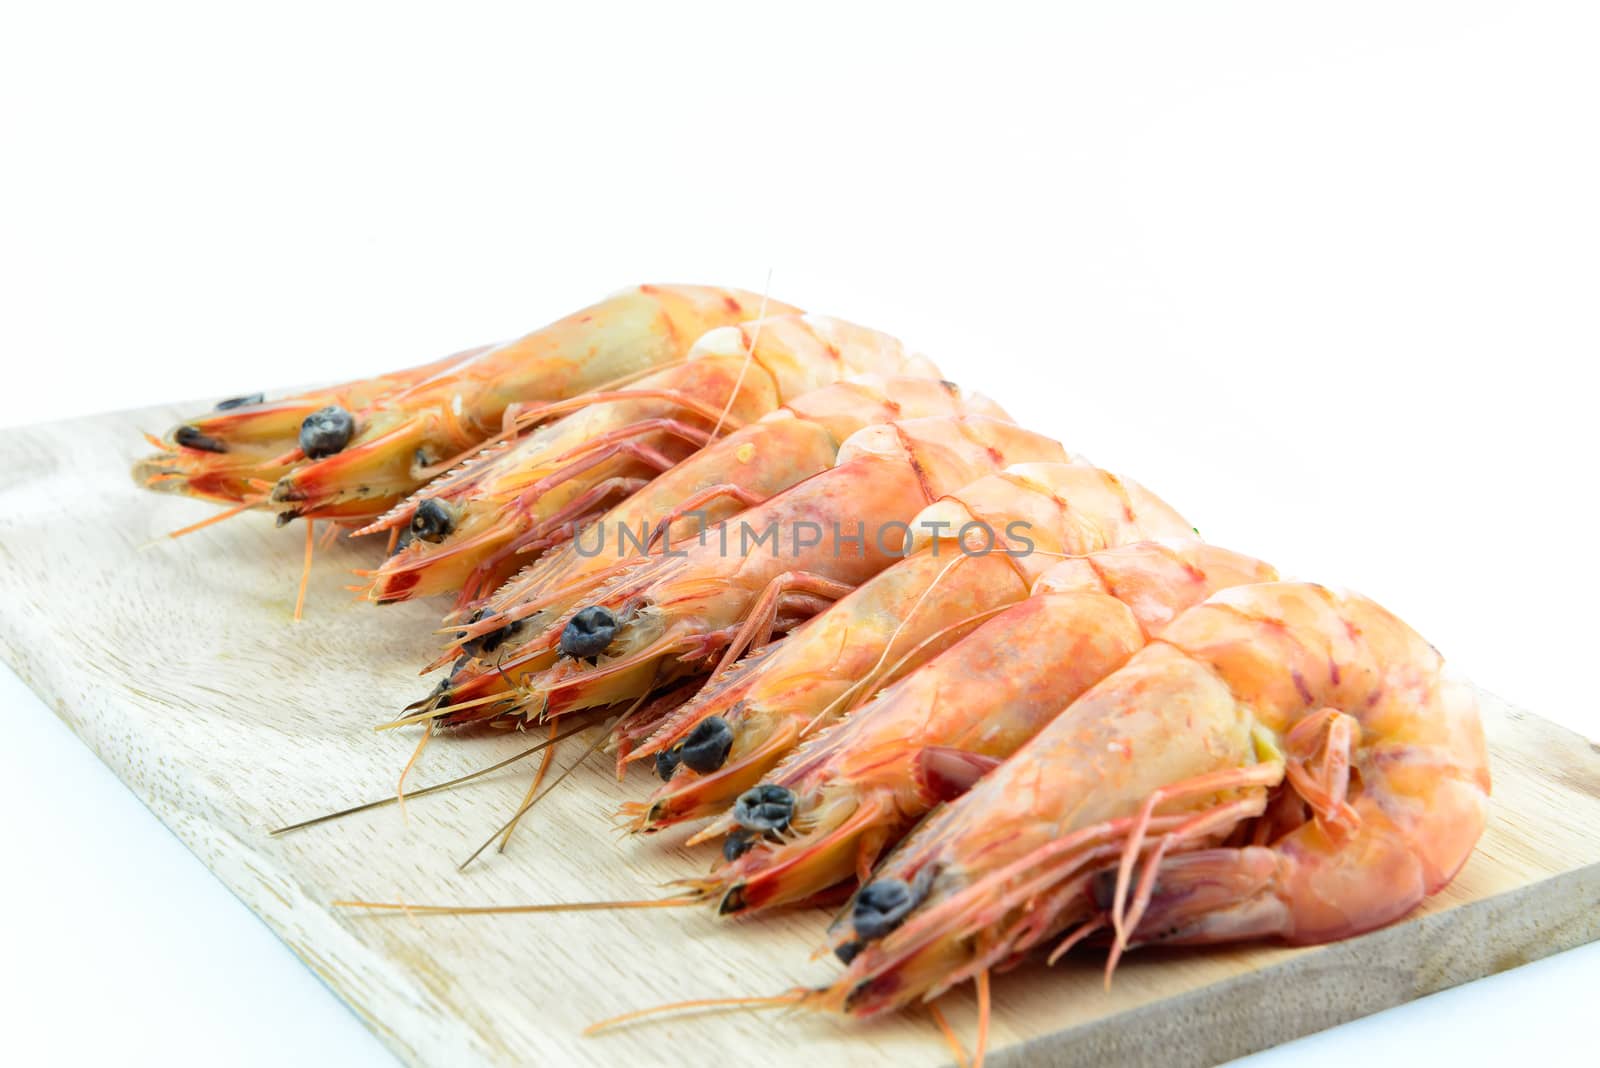 Boiled shrimp on wooden board on white background